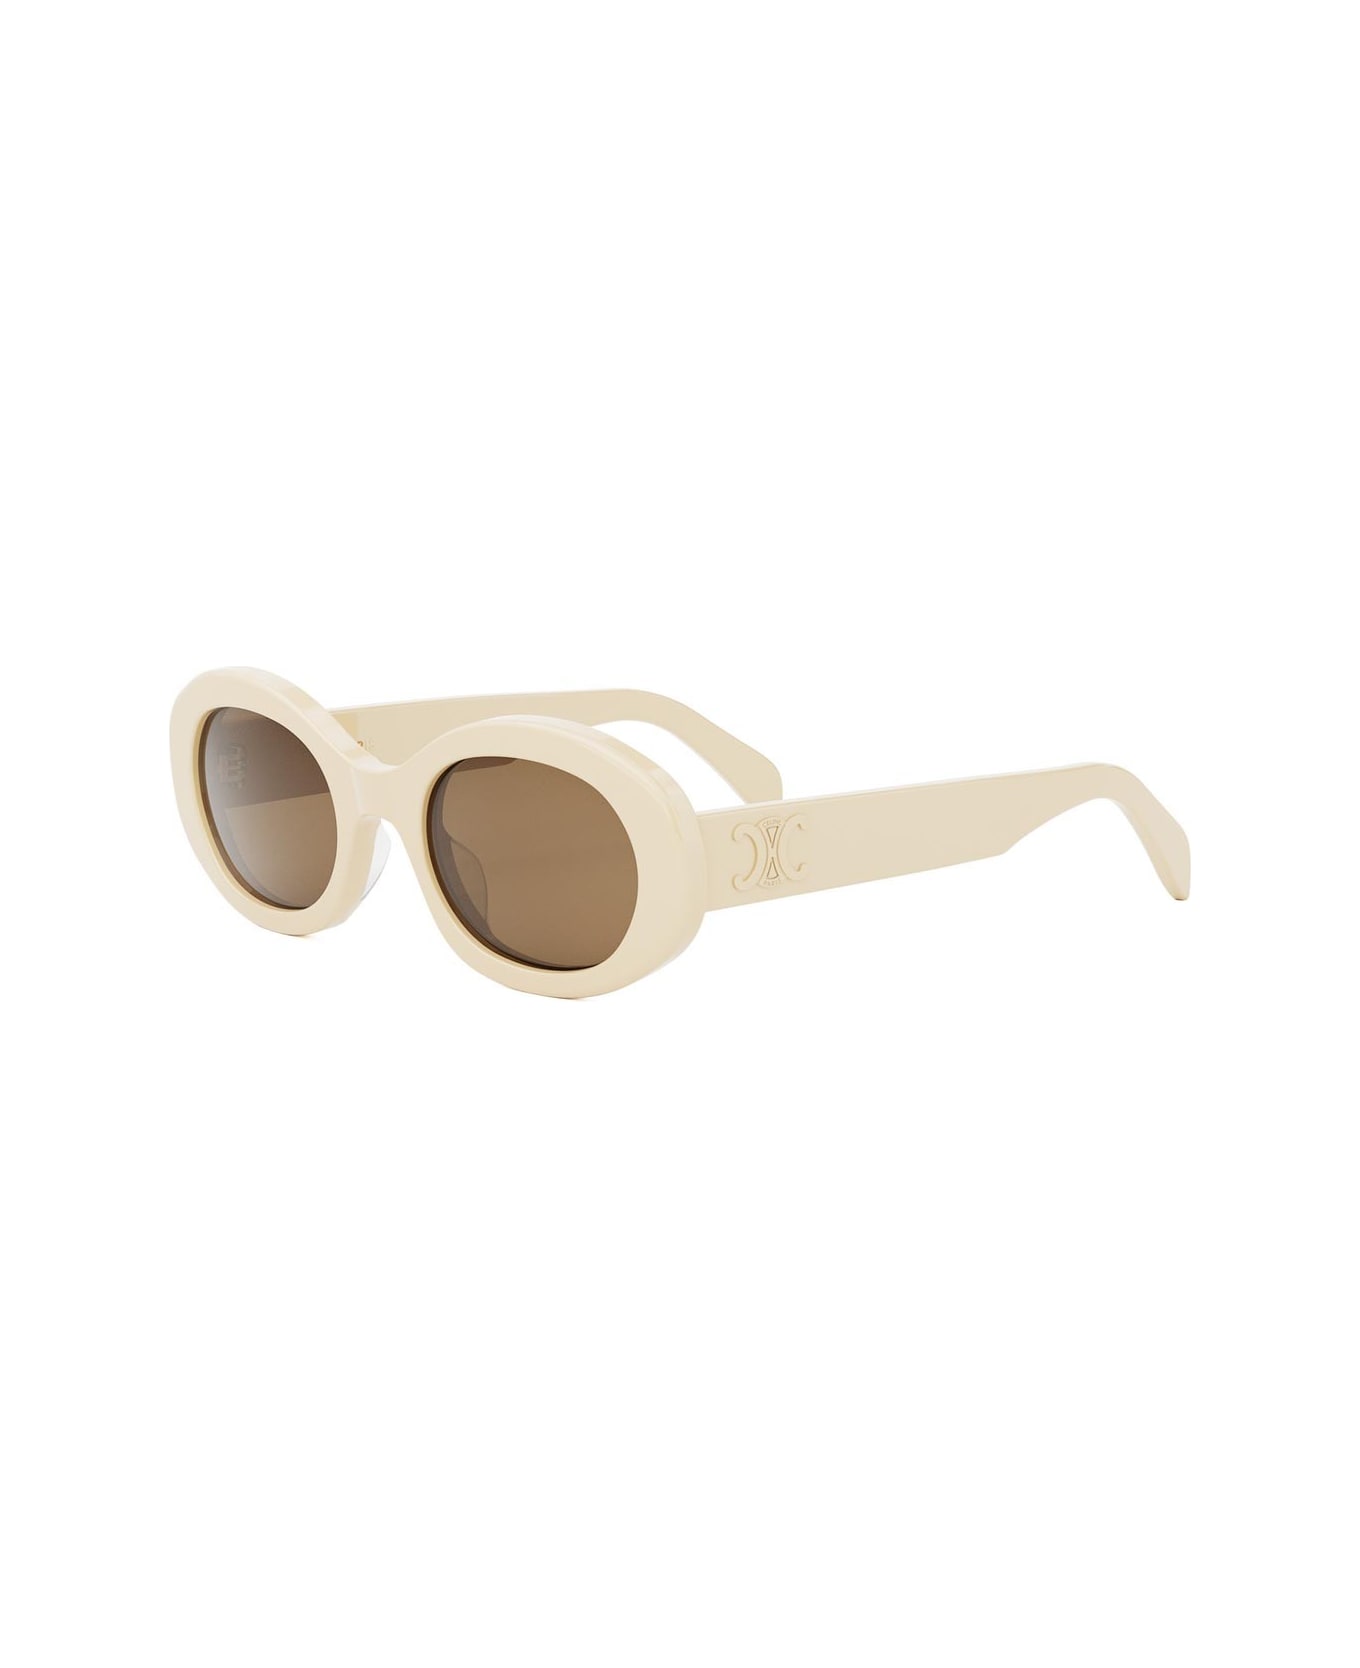 Celine Sunglasses - Avorio/Marrone